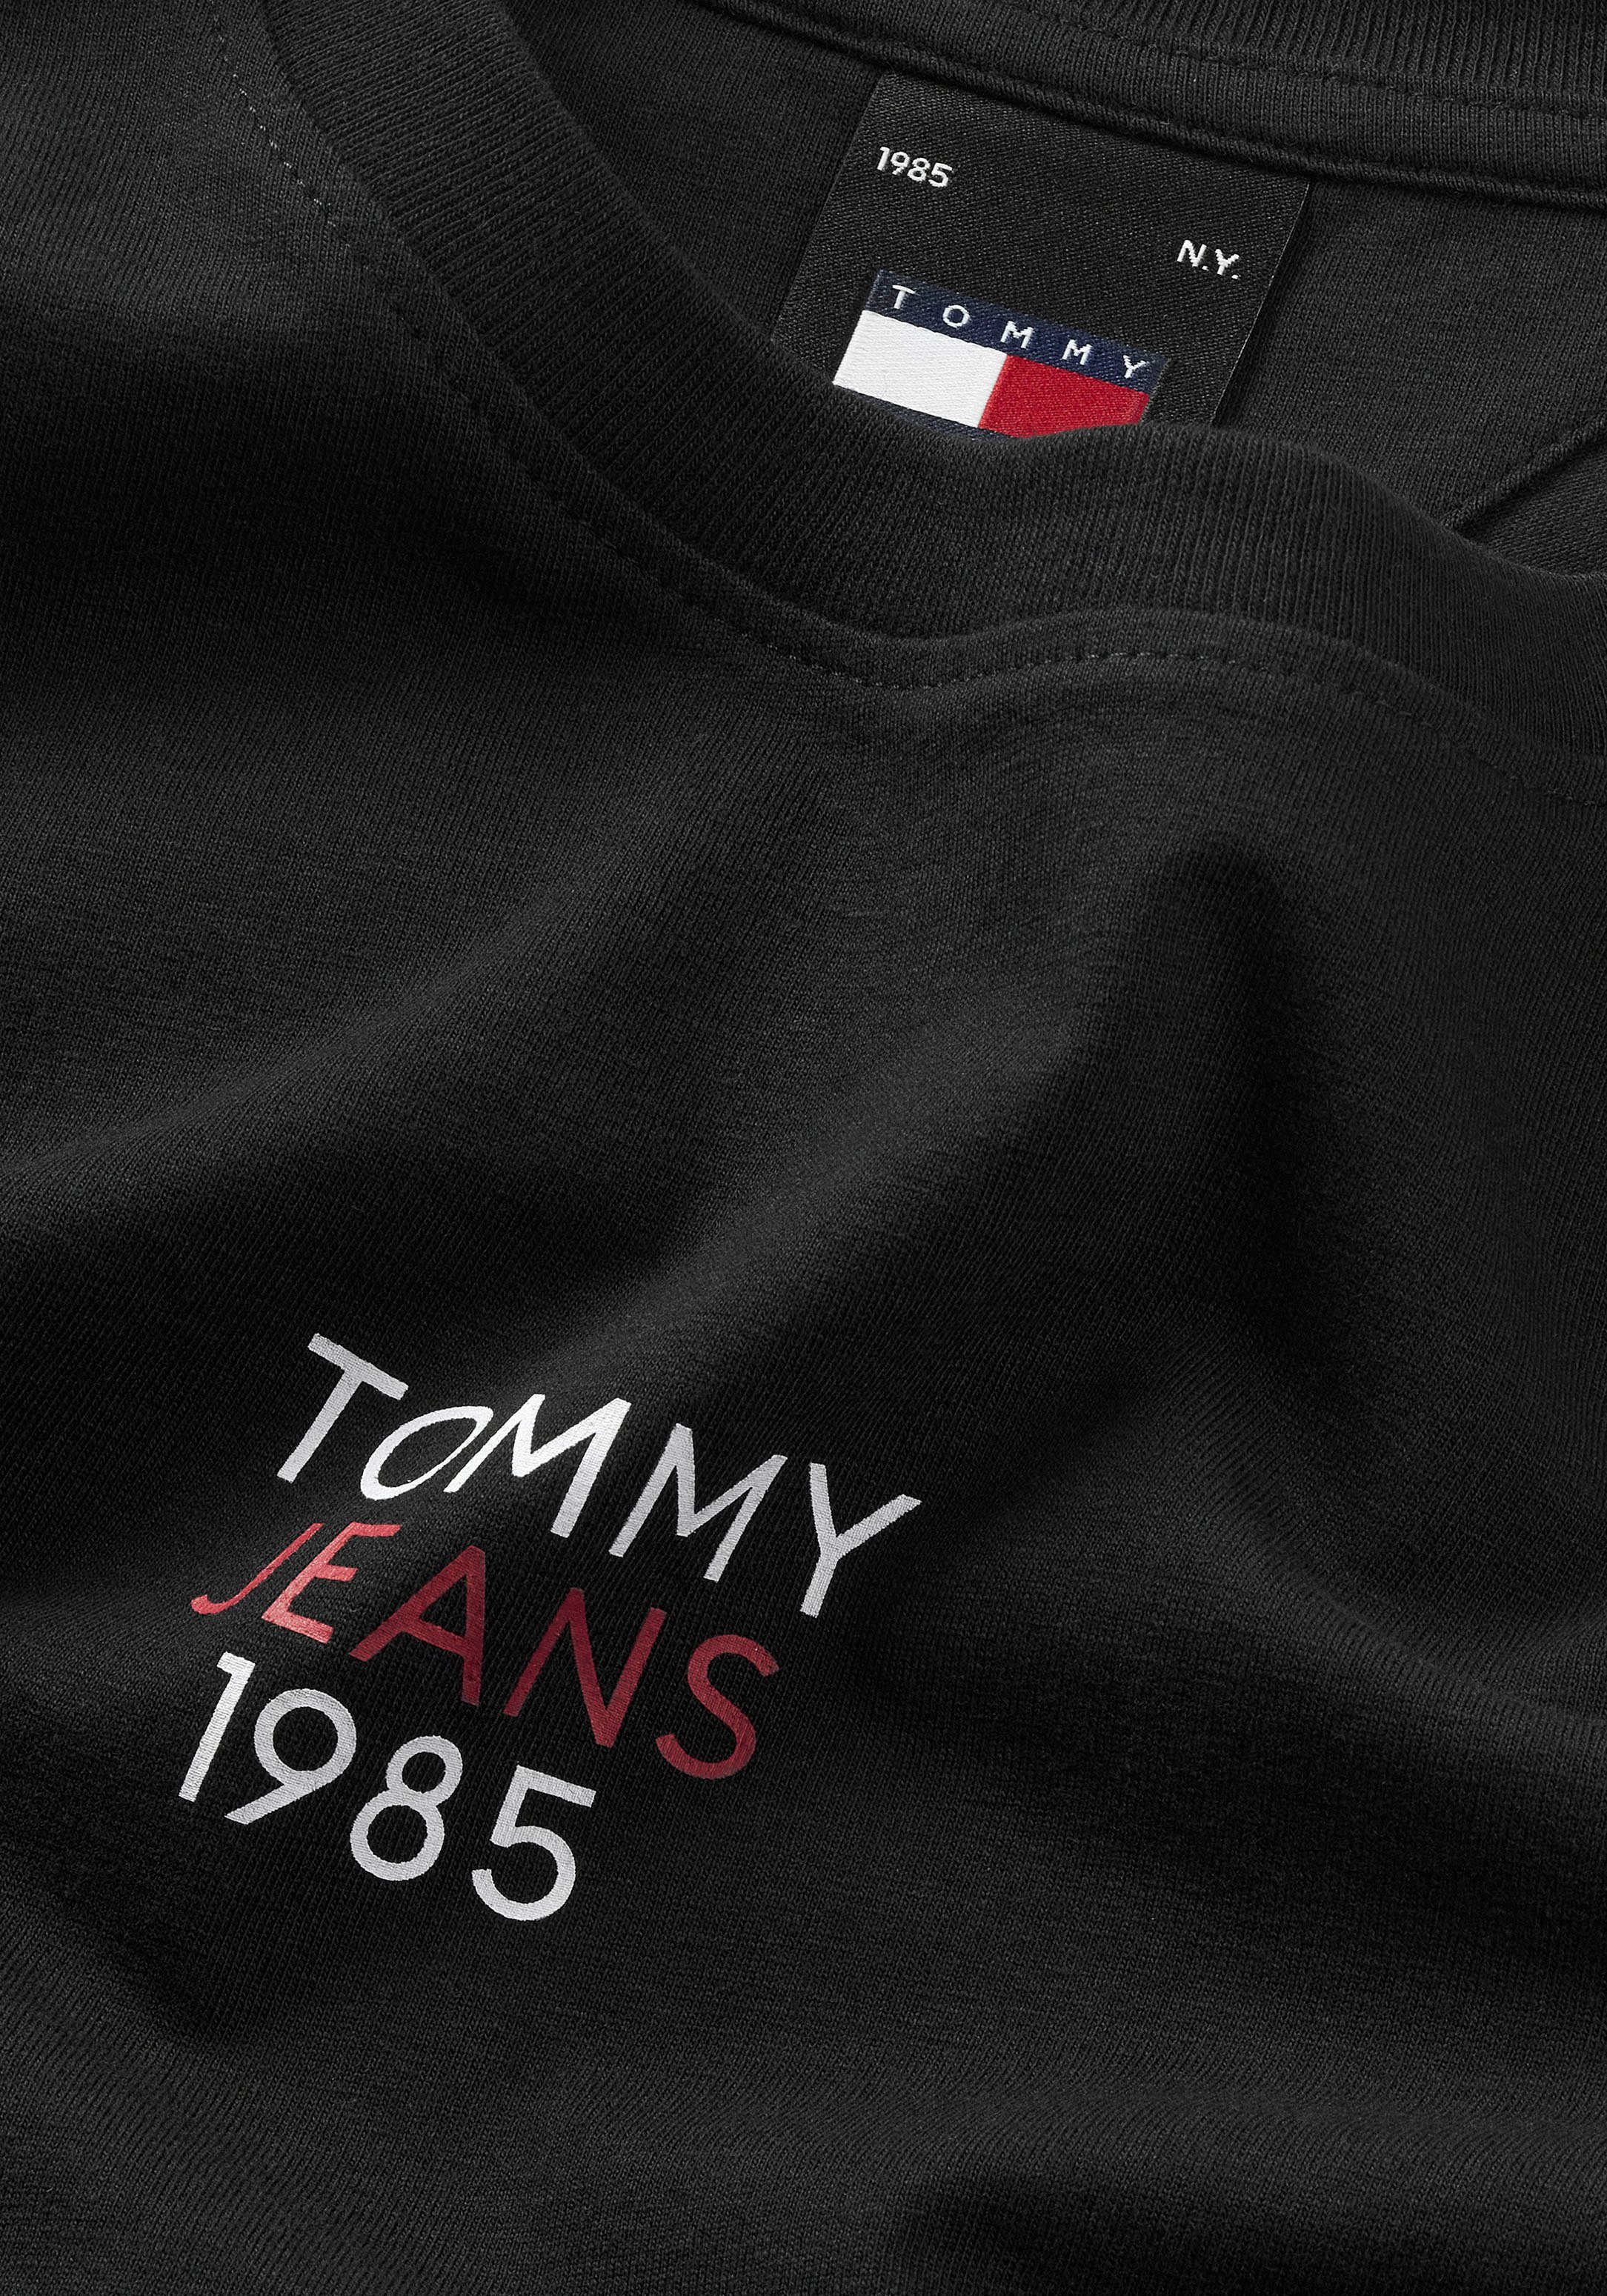 Essential Black Jeans T-Shirt mit Slim Logoschriftzug Logo Tommy